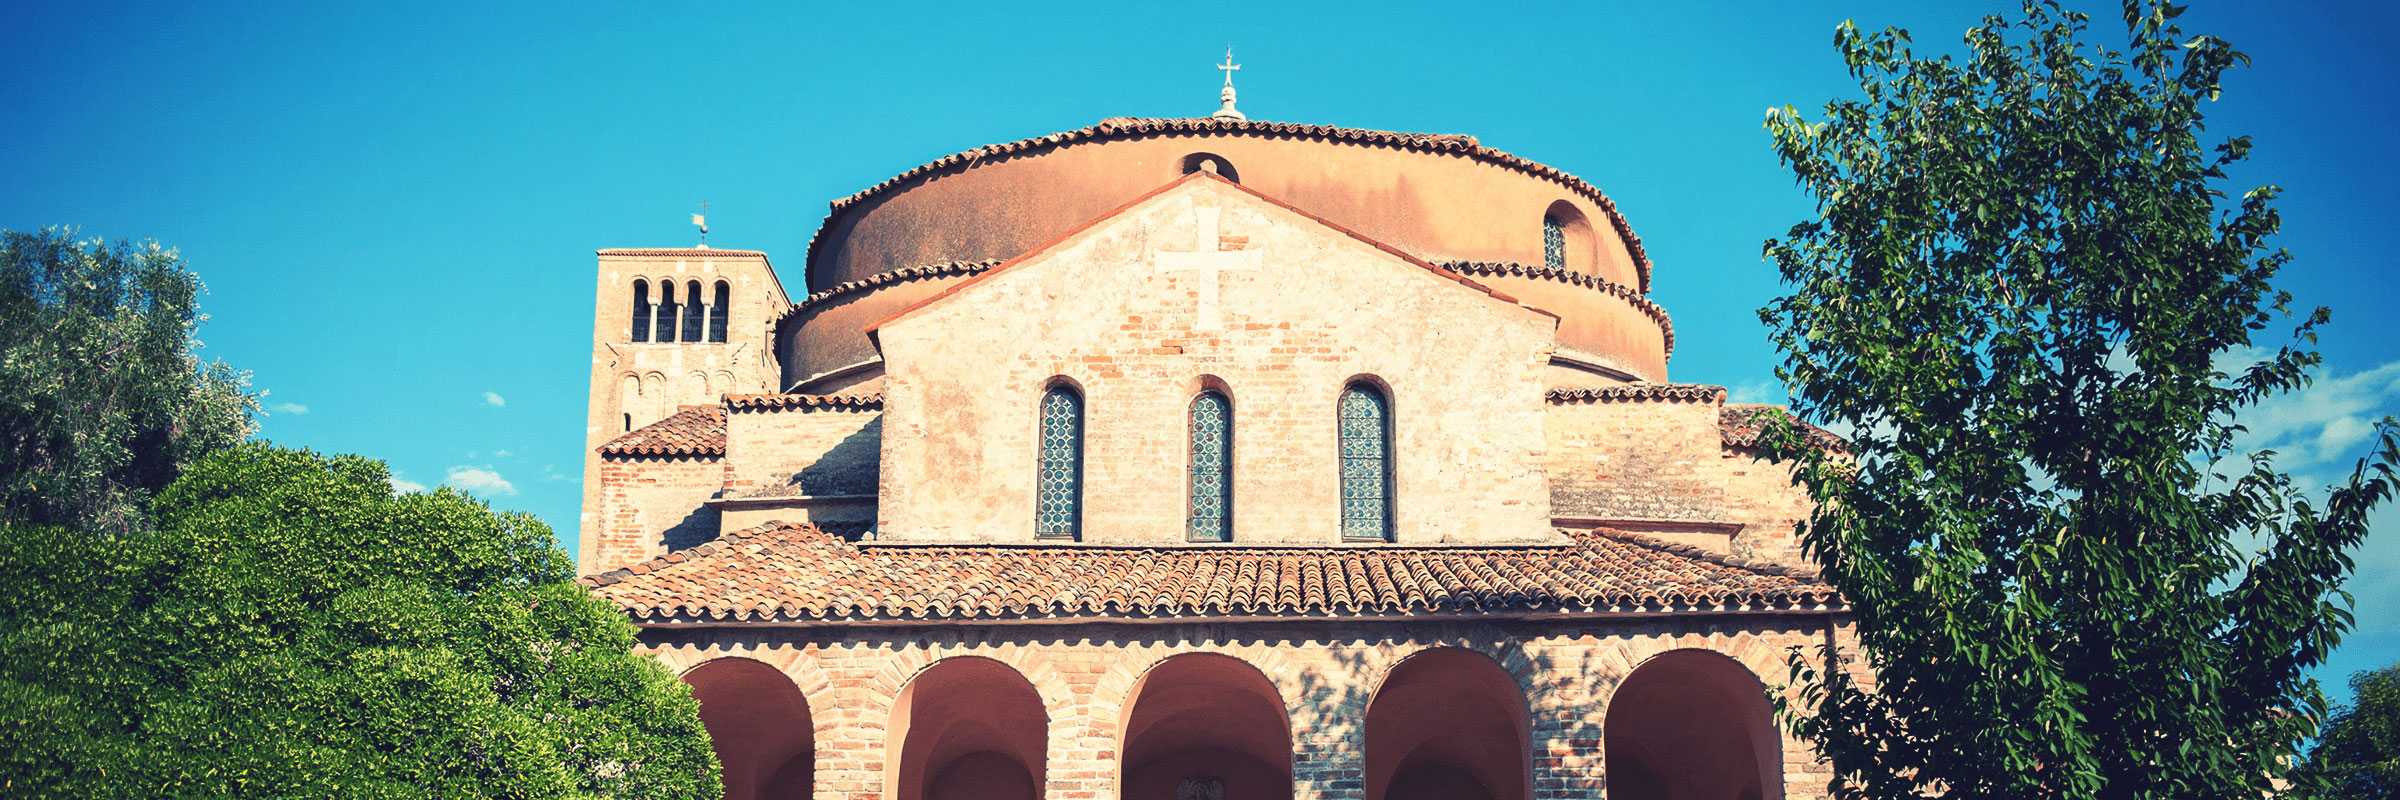 Detail of the facade of the Church of Santa Fosca in Torcello — (Archivio Bazzmann/Venipedia).